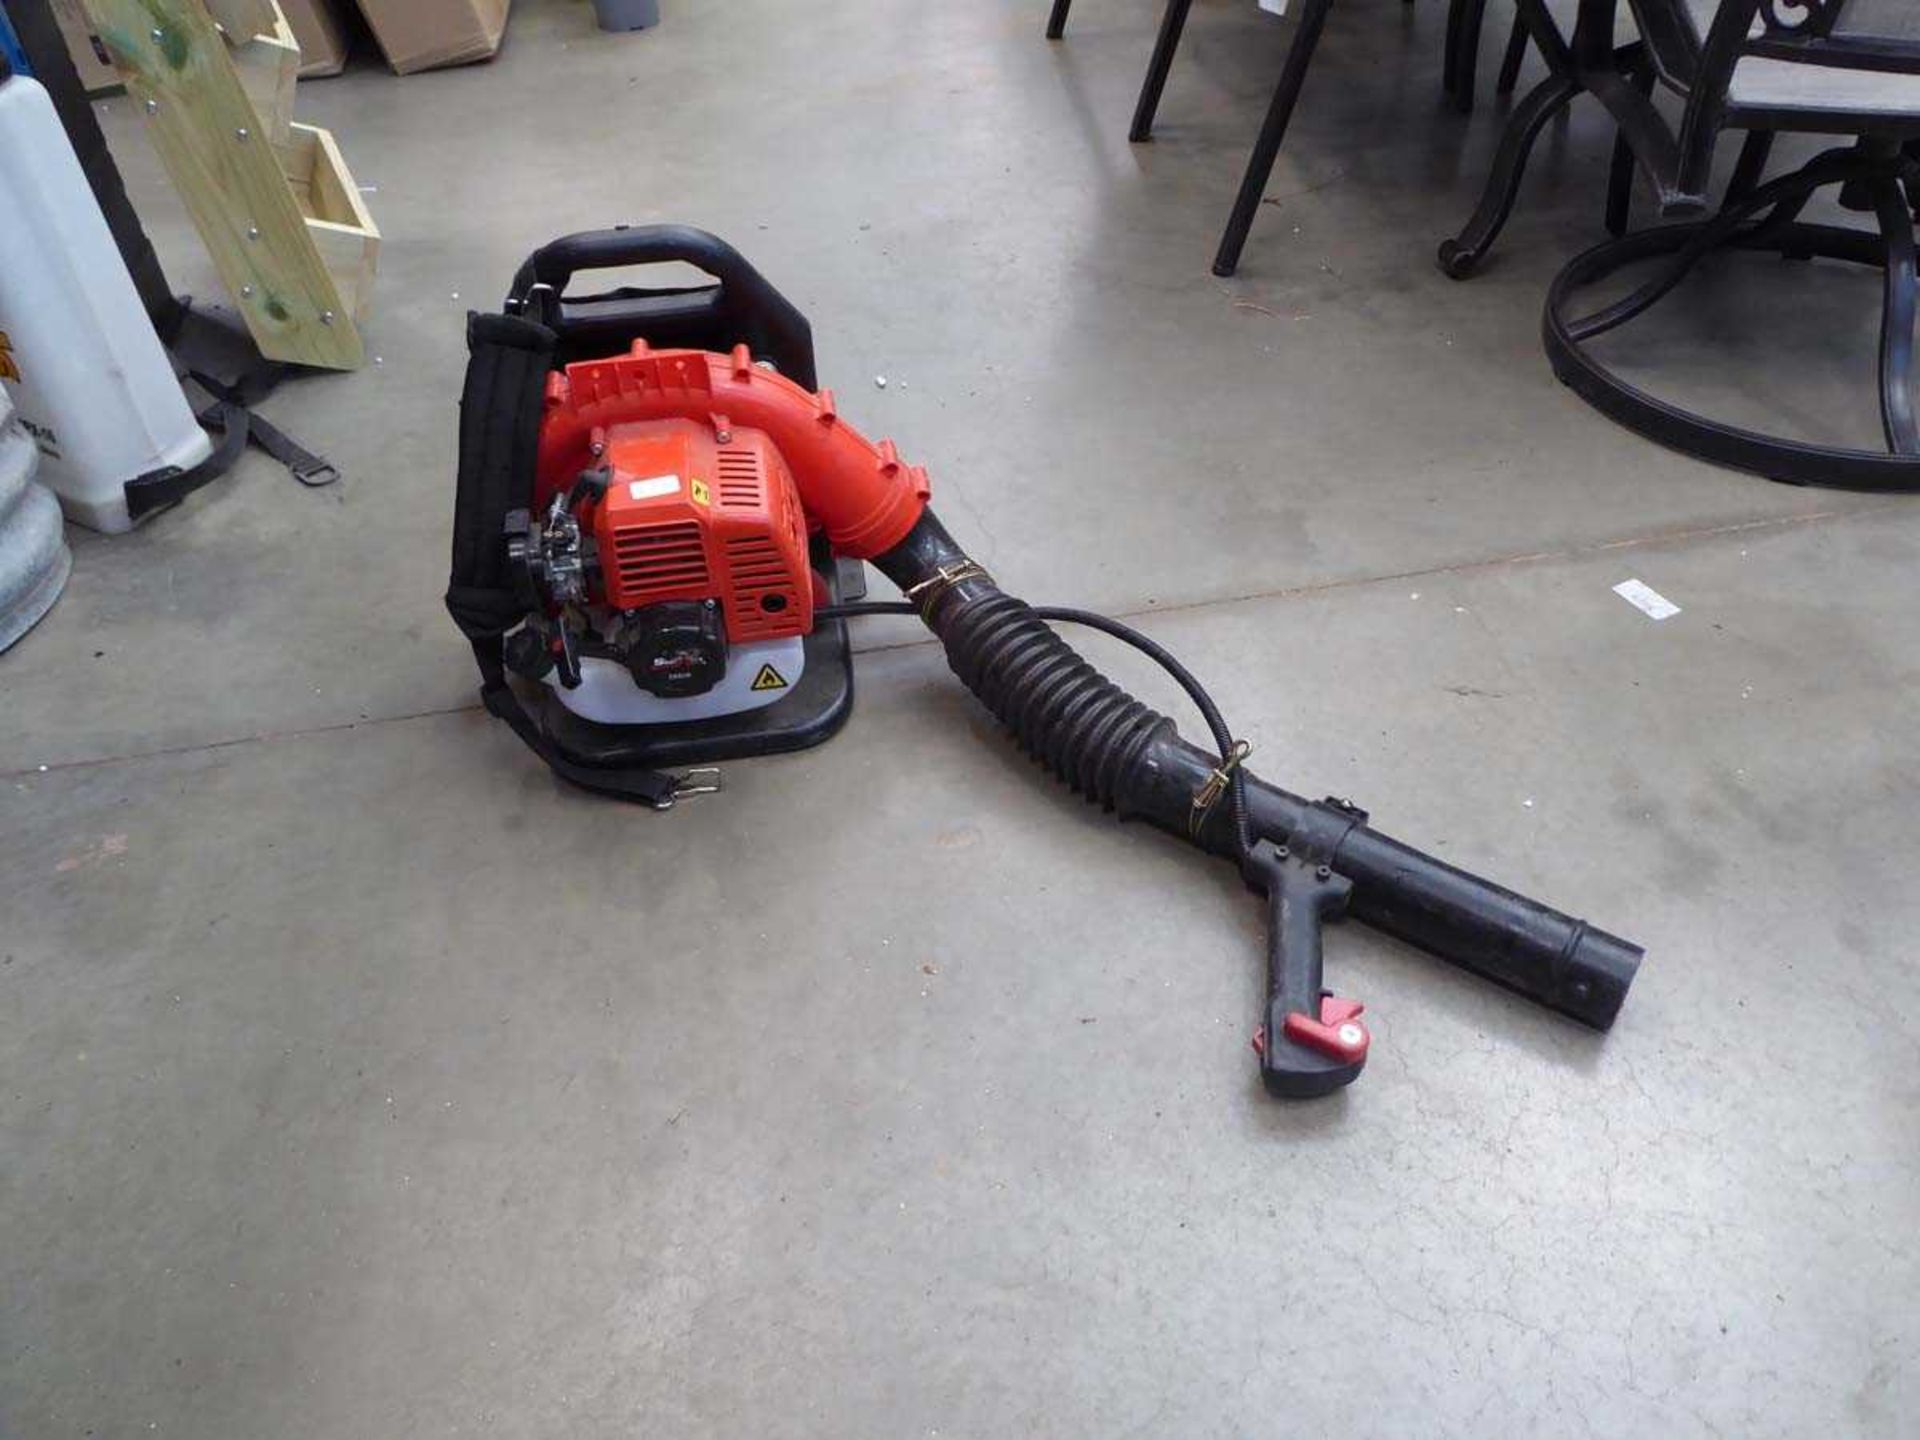 Red petrol powered leaf blower